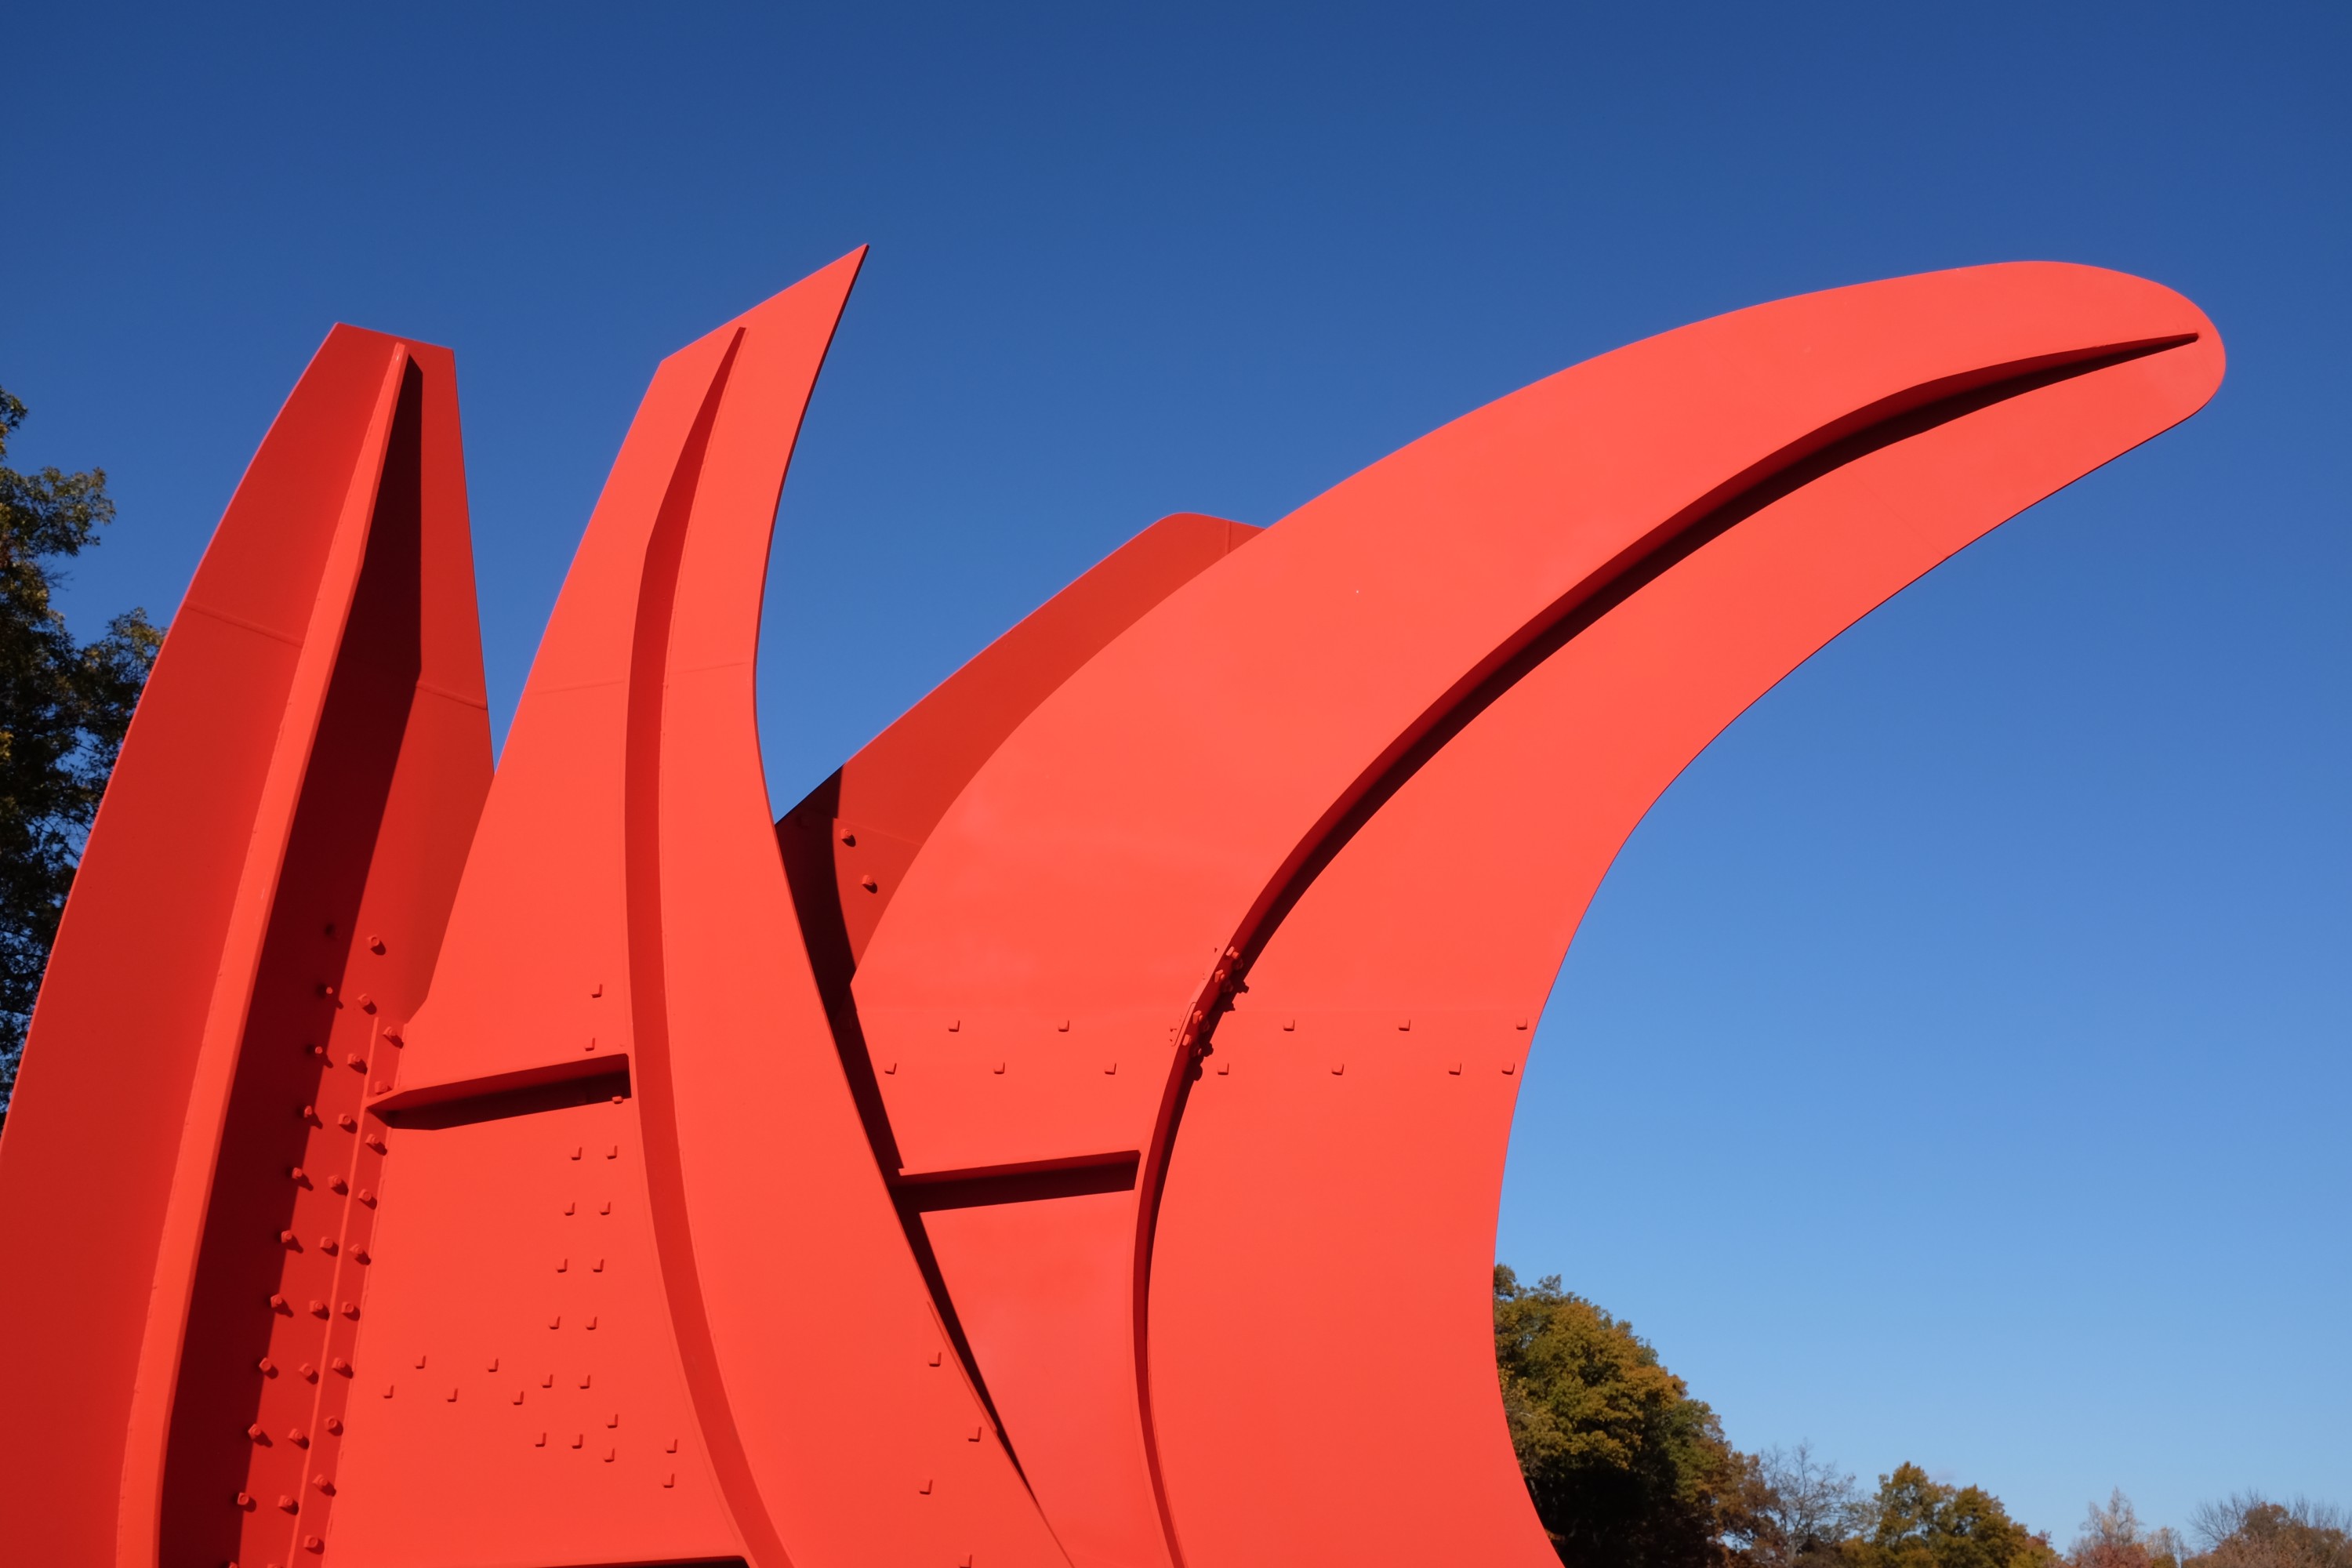 Five Swords, sculpture by Alexander Calder